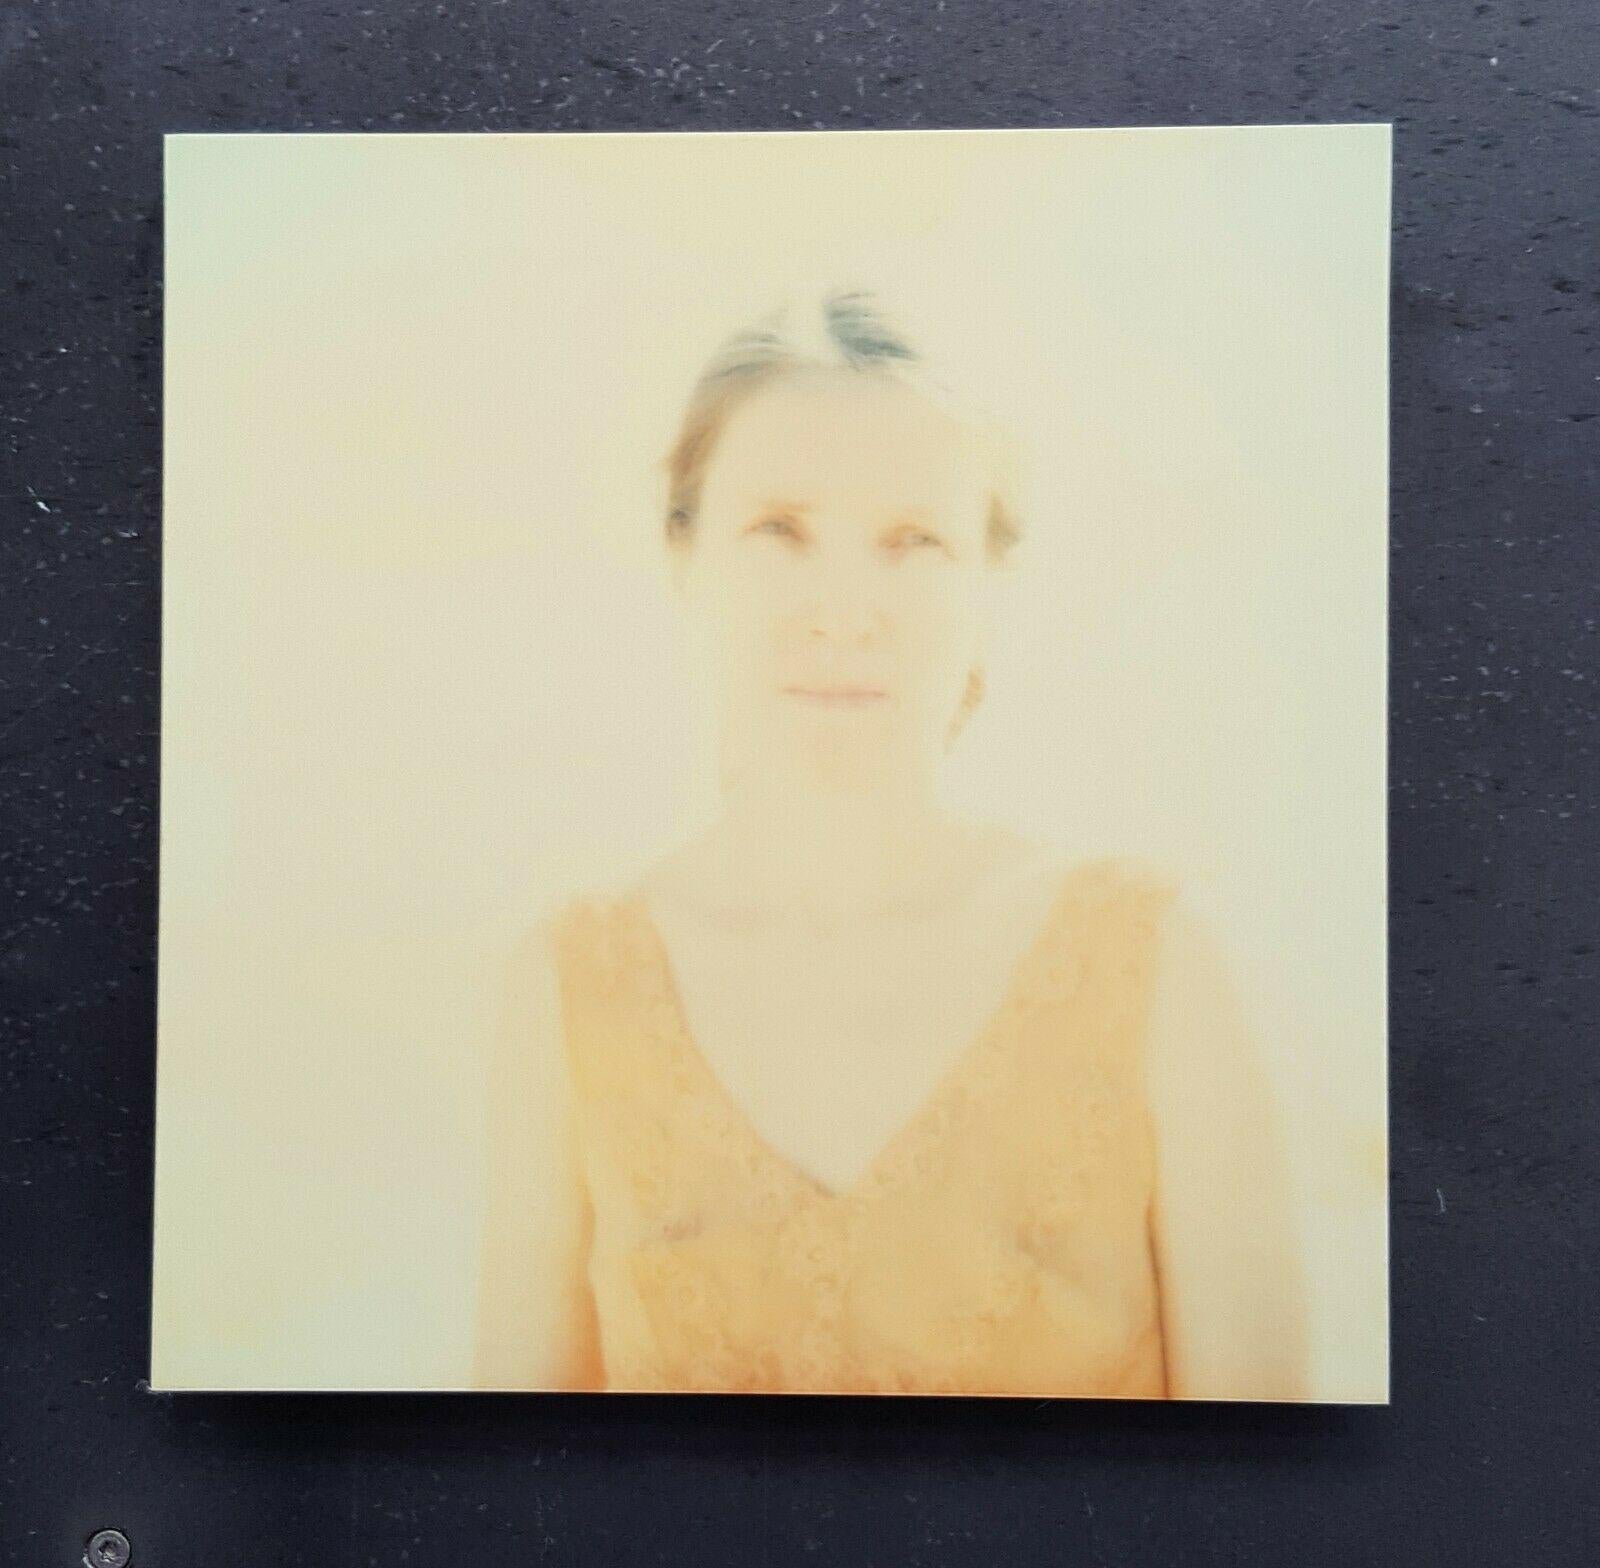 Oilfields, diptych - mounted - Polaroid, Contemporary, Portrait, Landscape 2